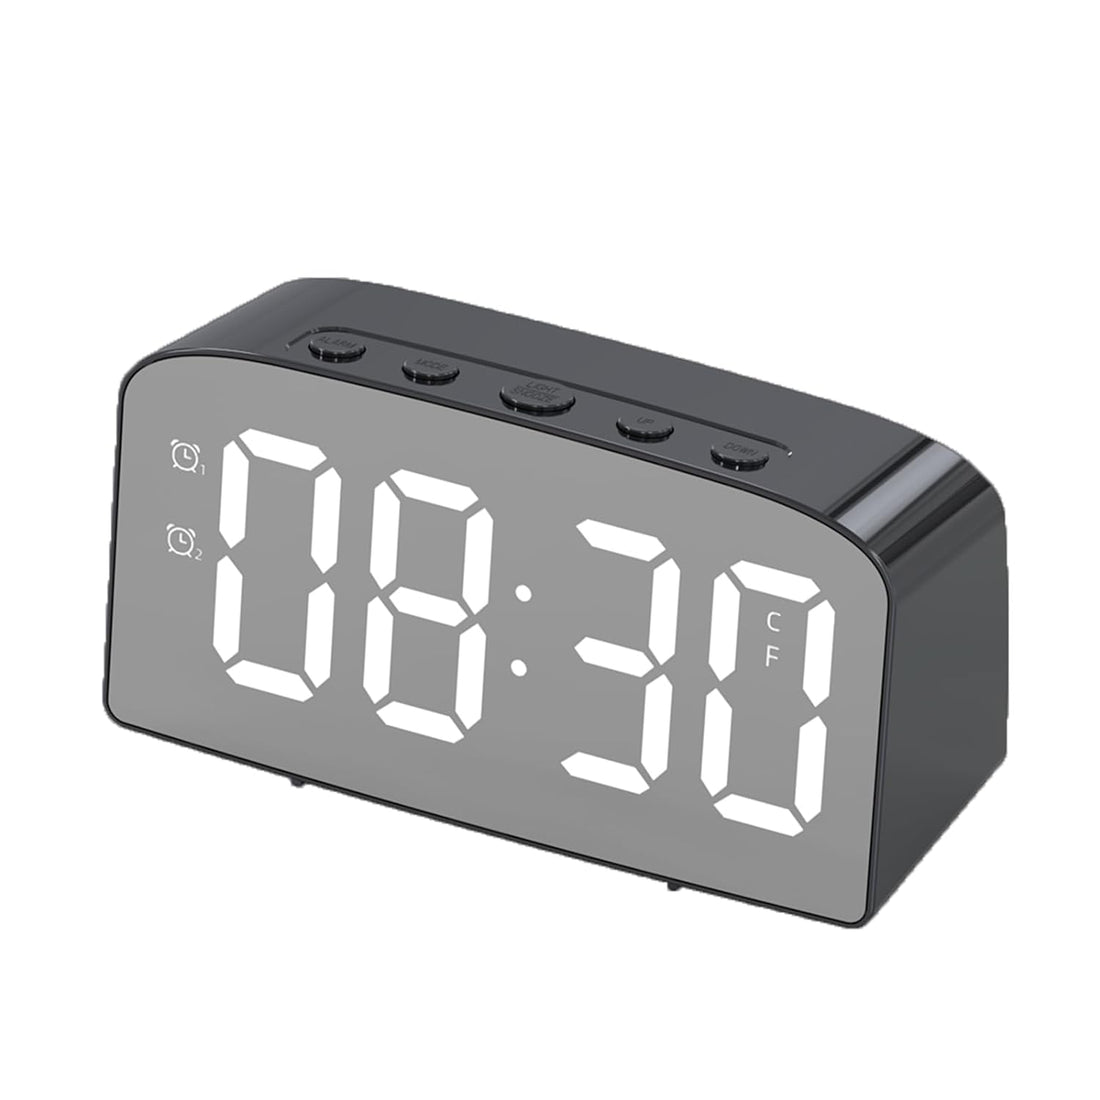 jomparis Digital Alarm Clock Bedside -Sleek Alarm Clock for Bedroom USB Charging LED Display Battery Backup